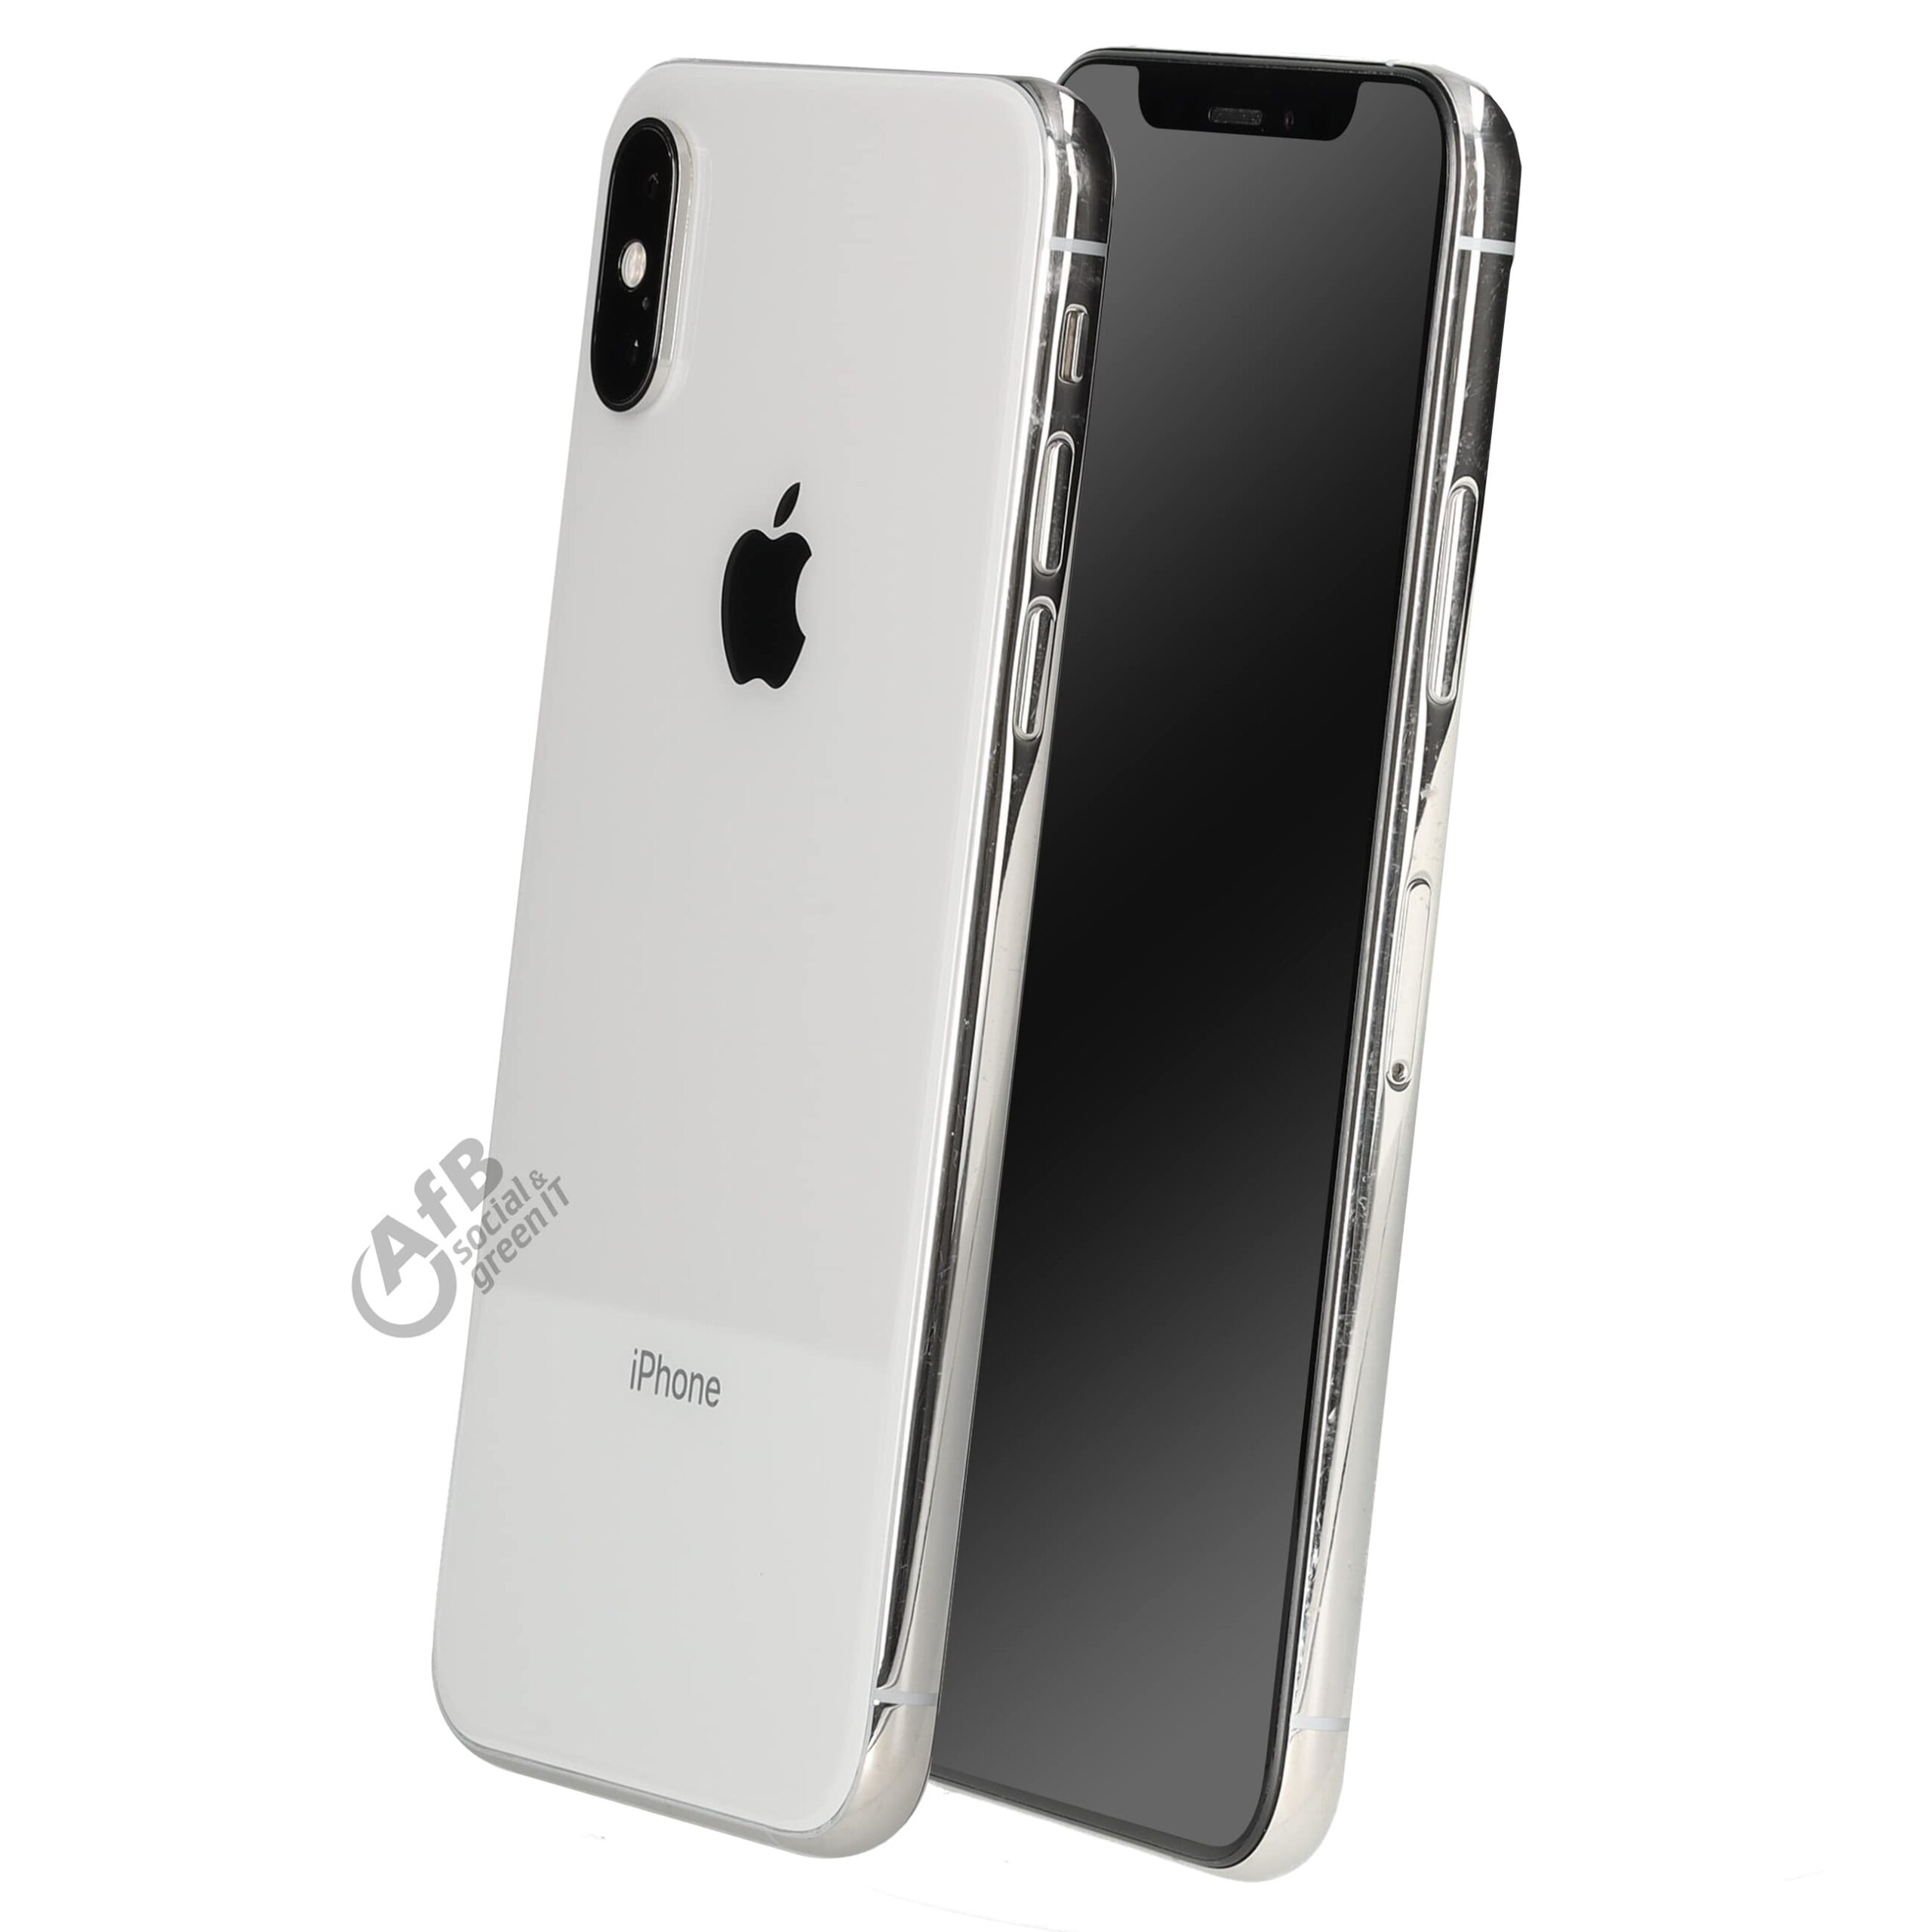 Apple iPhone XSSehr gut – AfB-refurbished